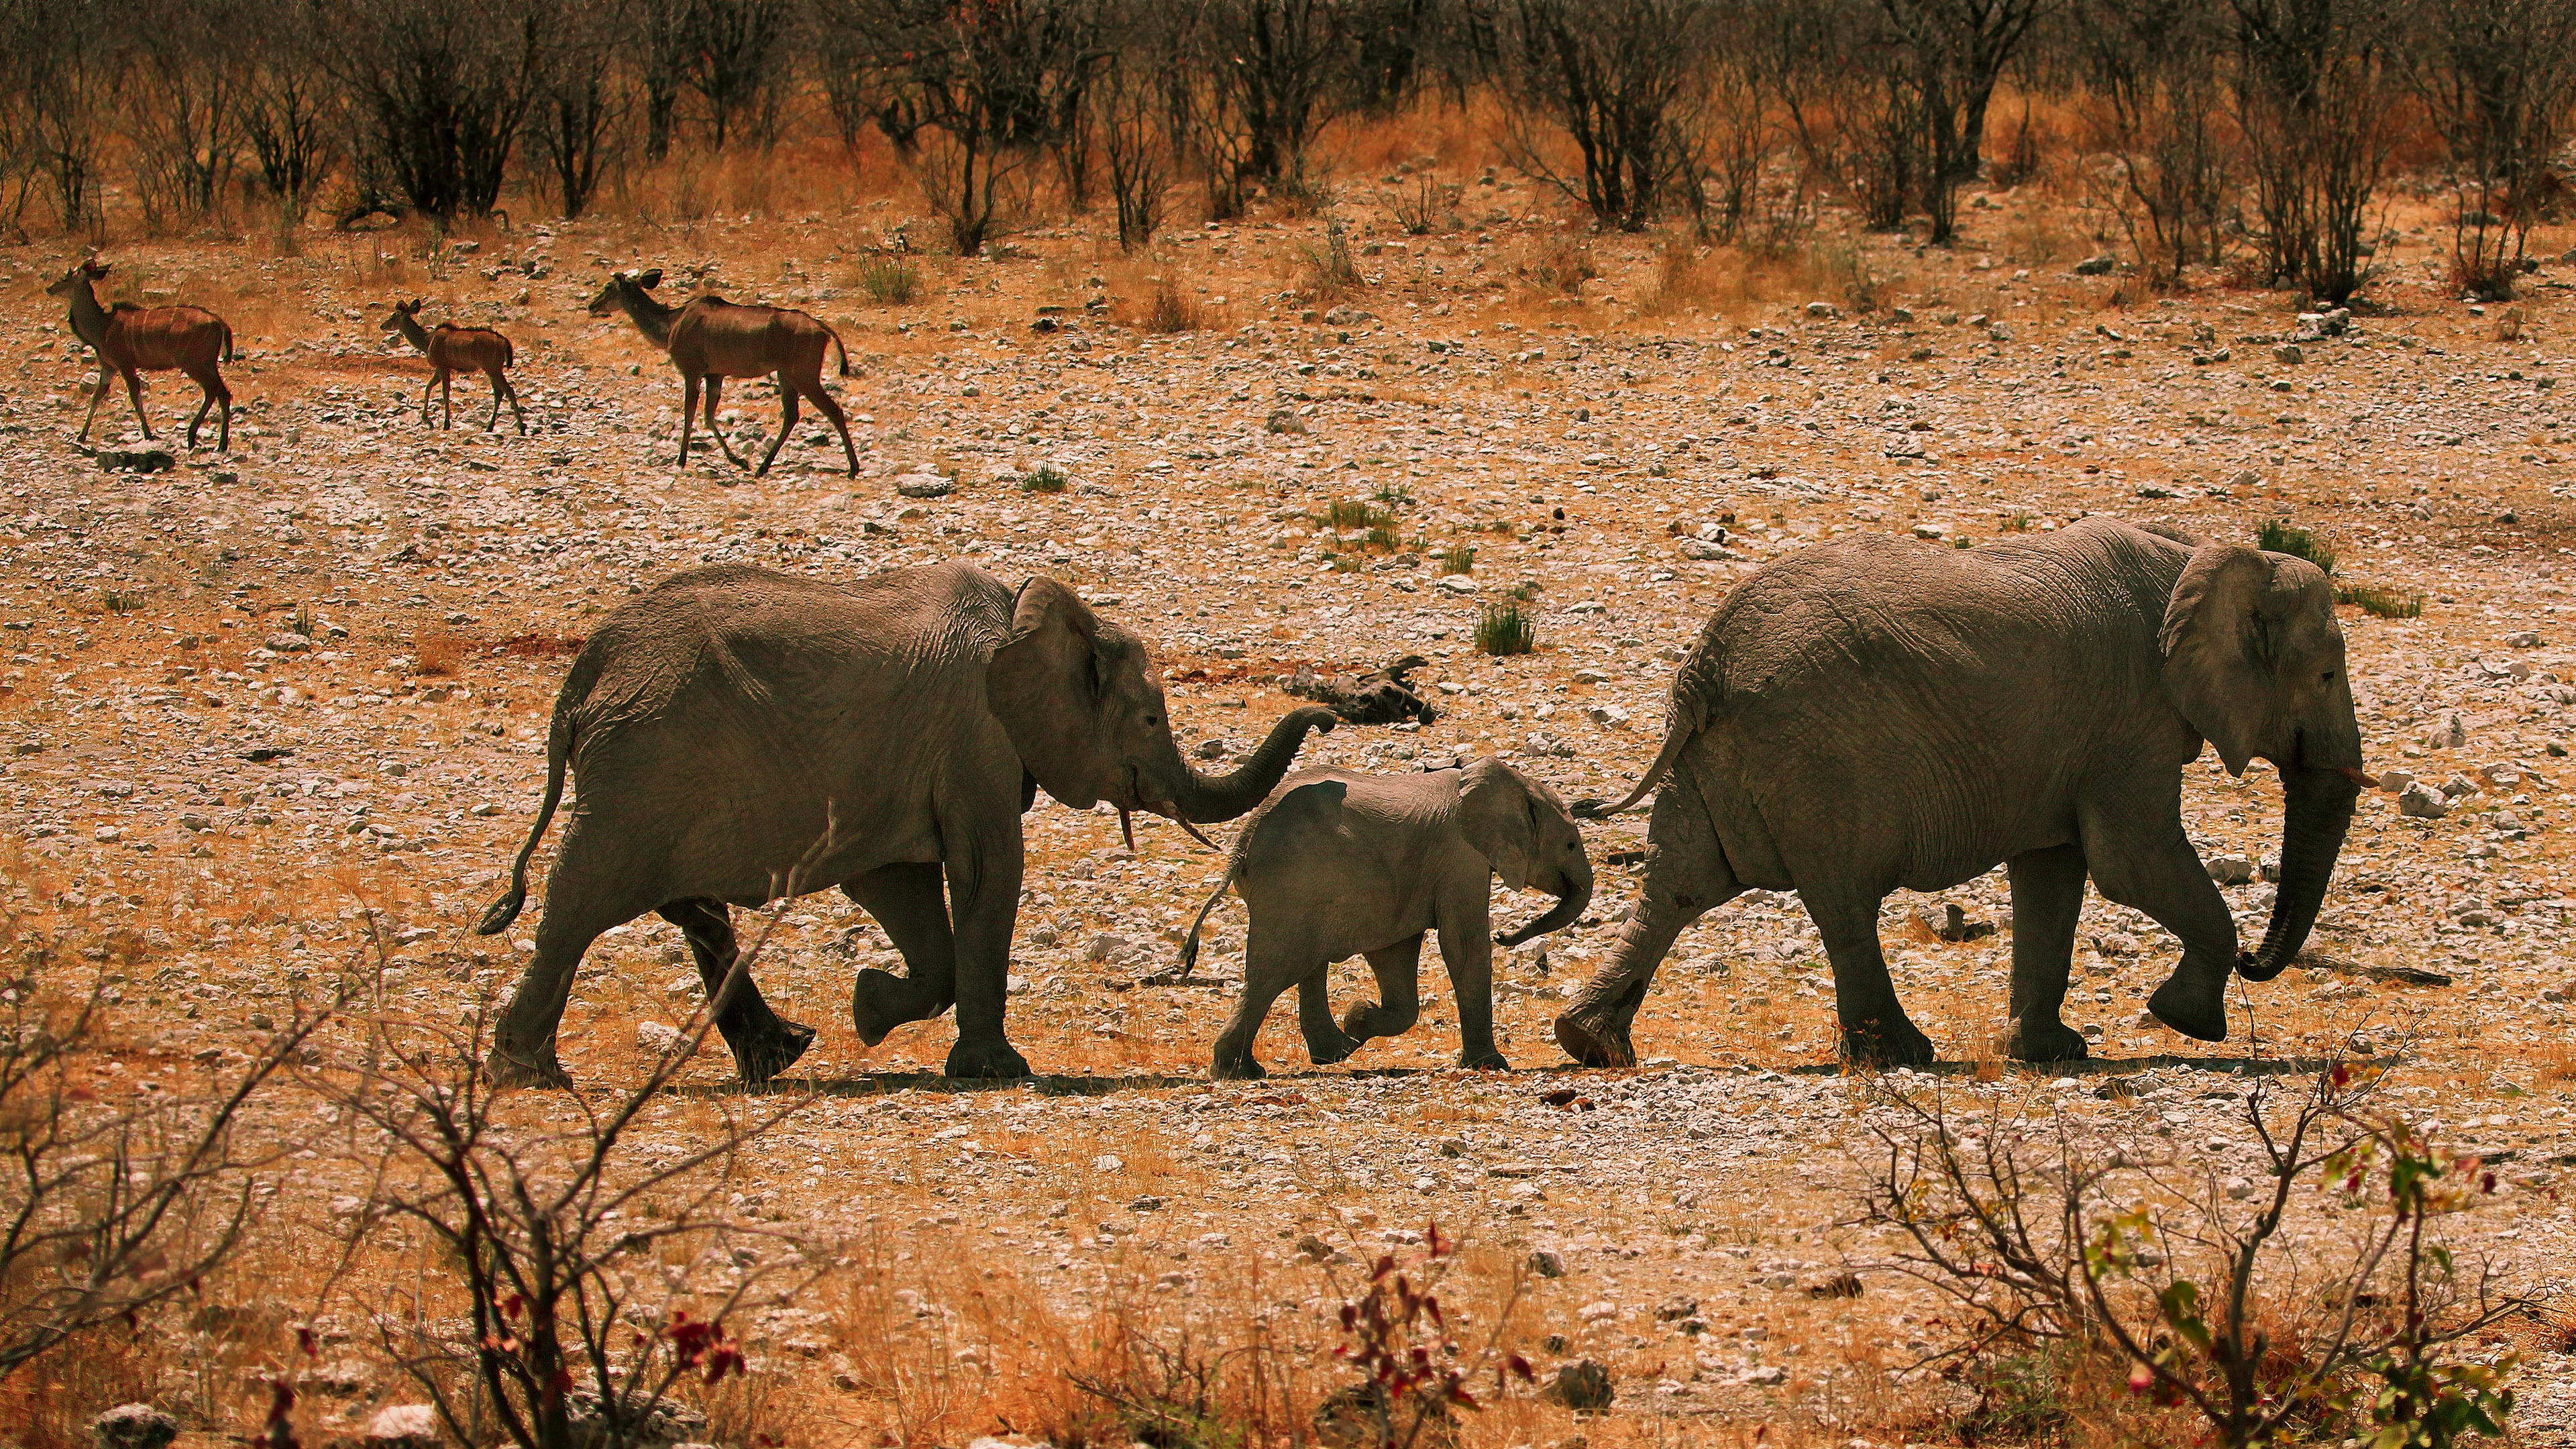 elephants family walk sand rocks bushes 4k 1542242819 - elephants, family, walk, sand, rocks, bushes 4k - walk, Family, Elephants